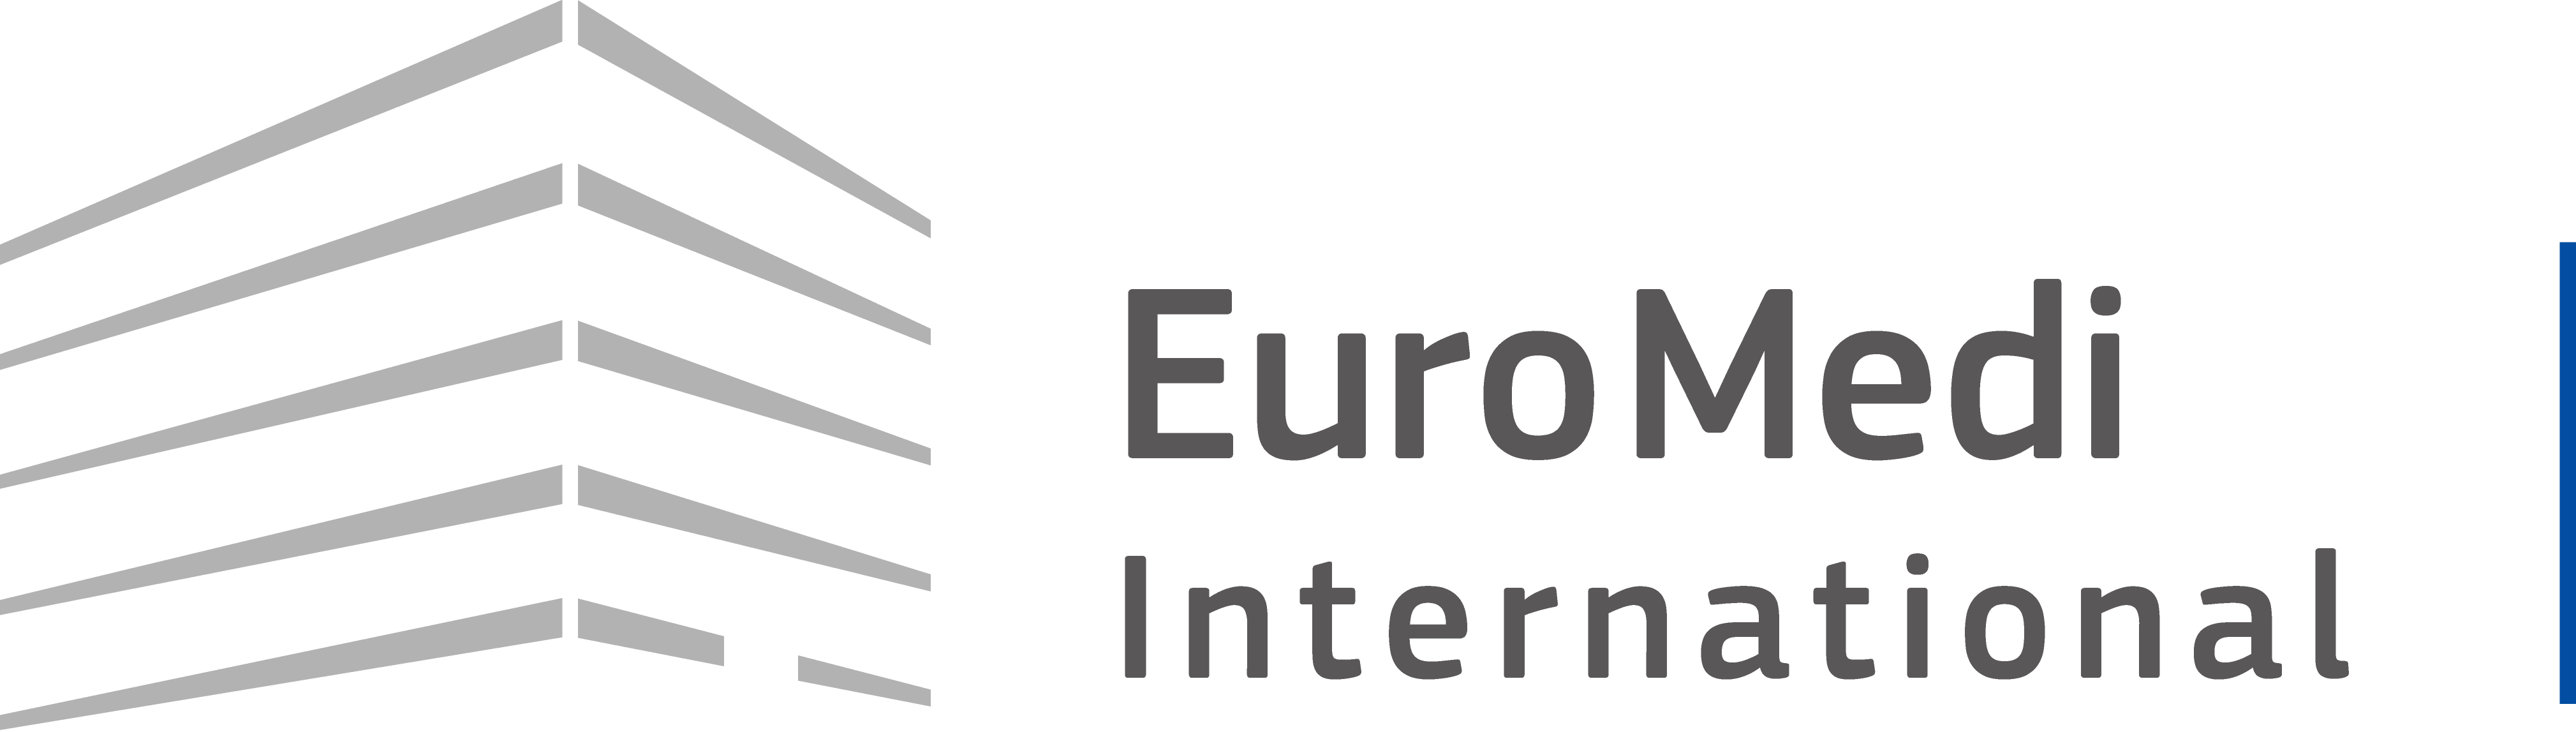 Euromedi logo